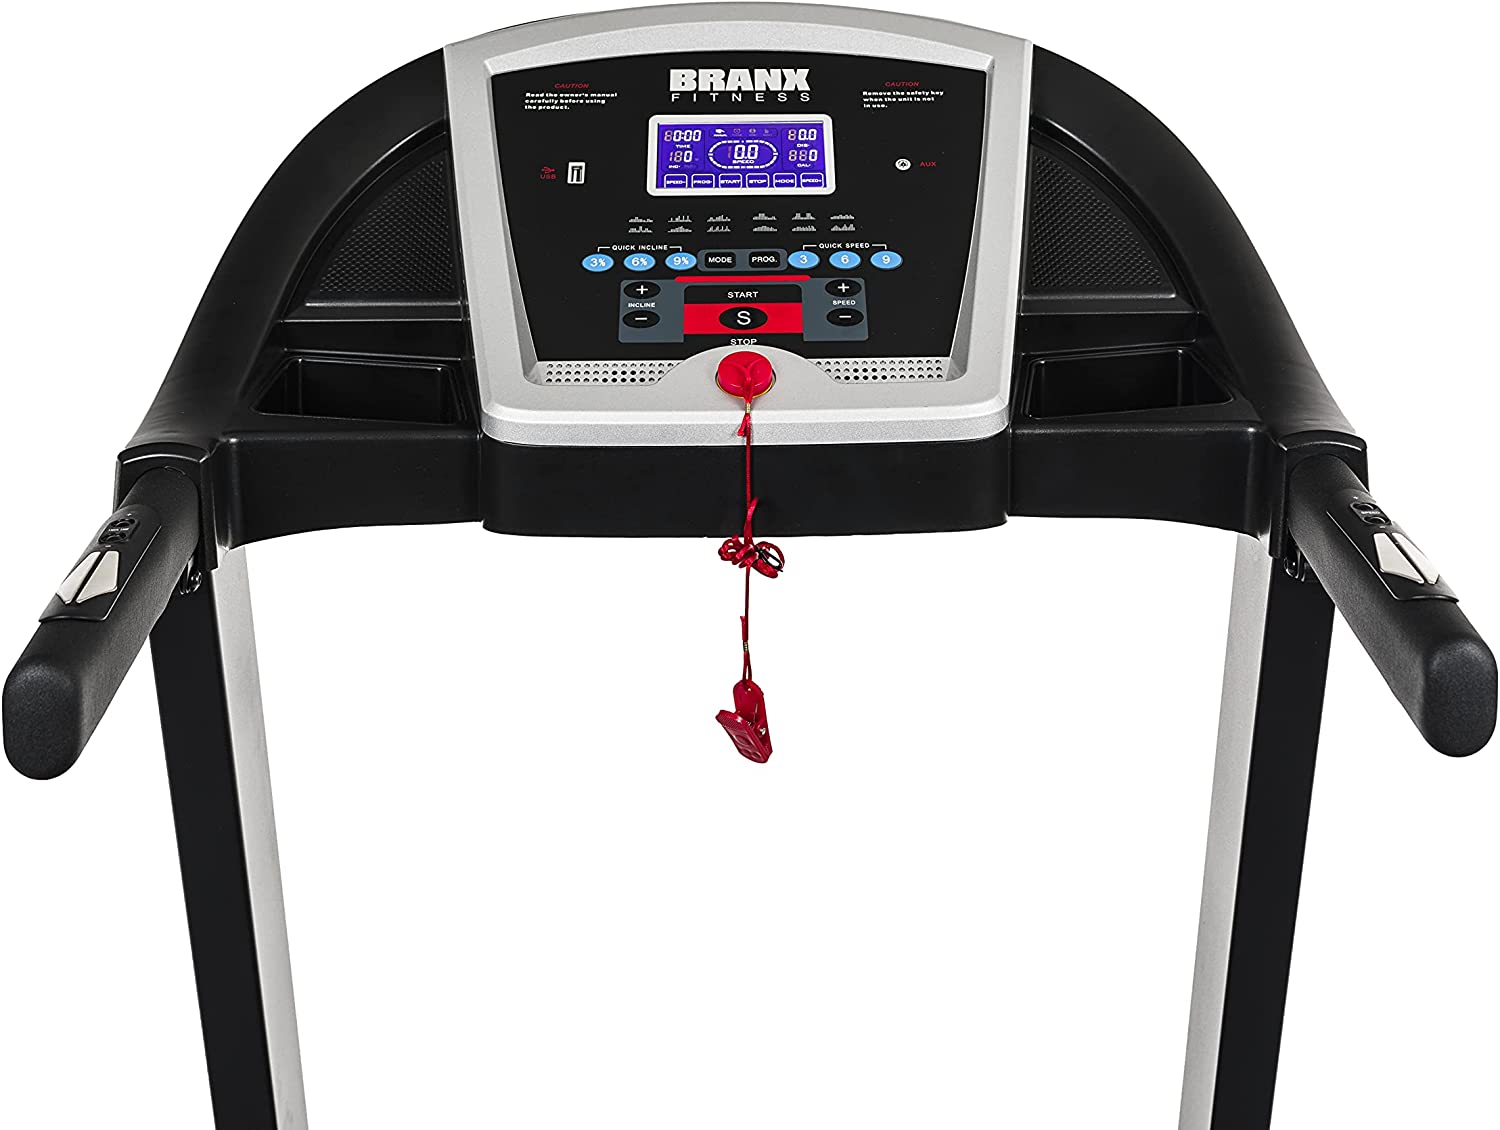 Branx Fitness Start Run Treadmill console